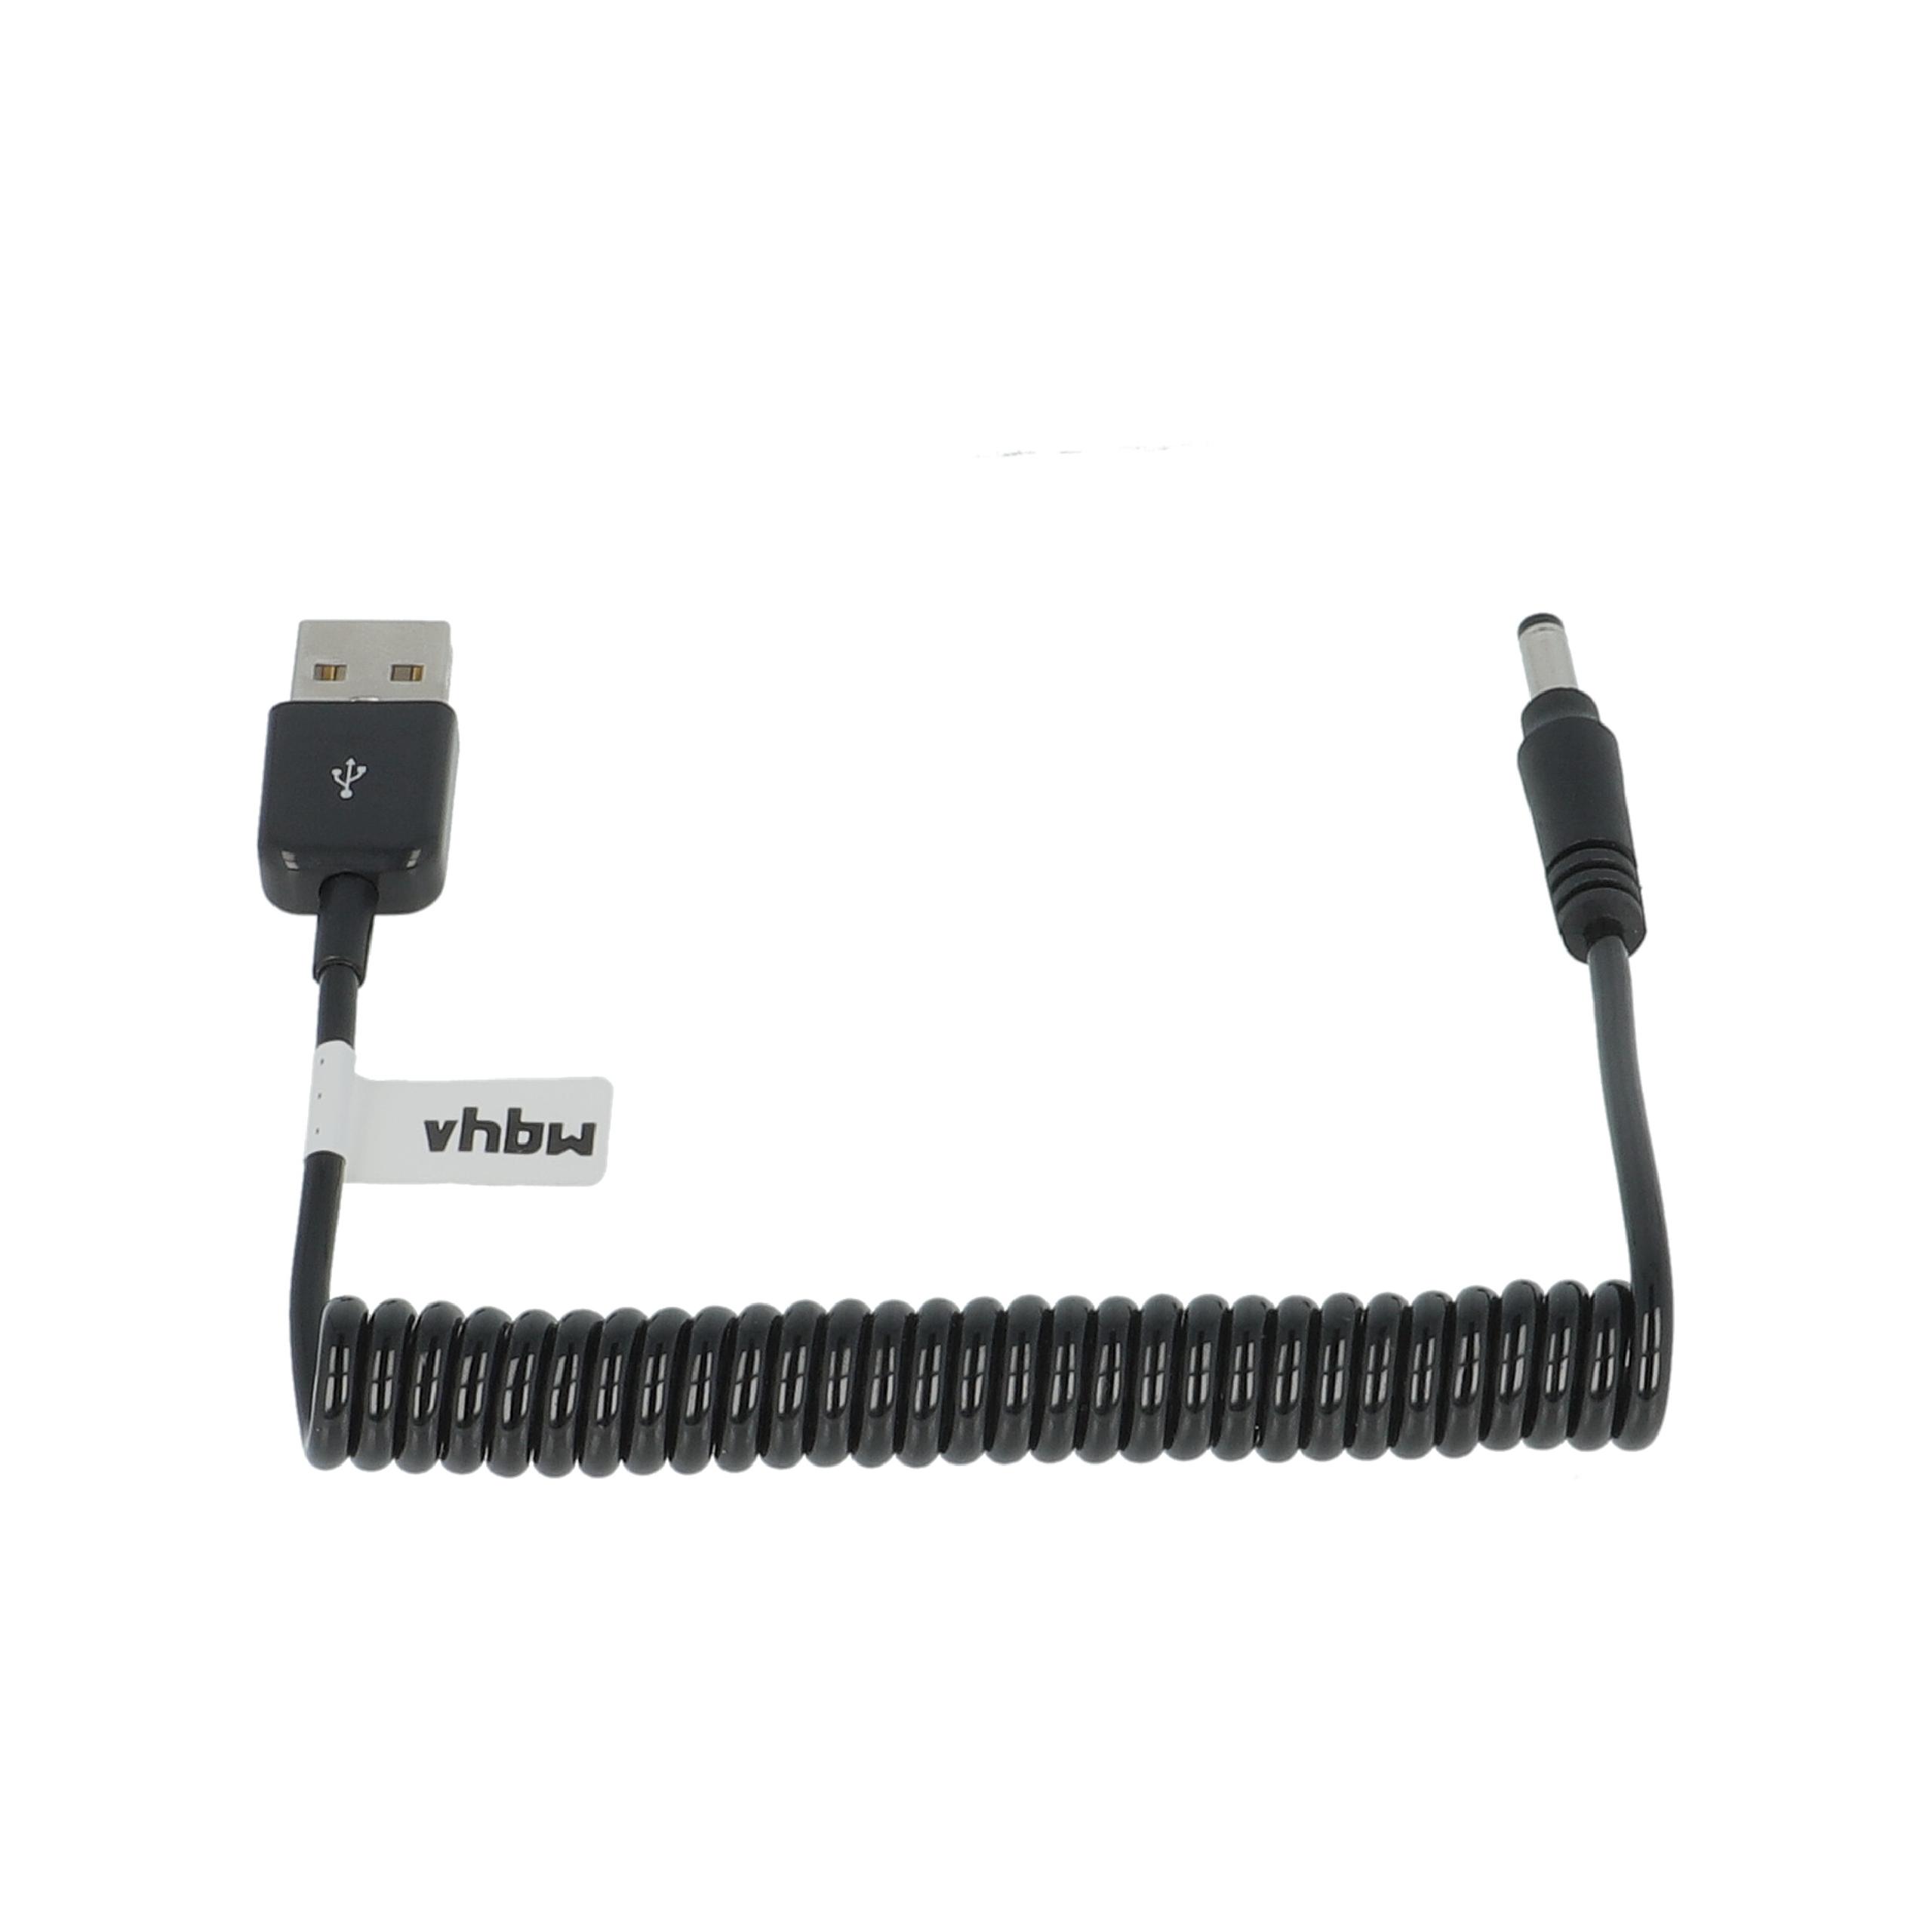 USB Ladekabel als Ersatz für Panasonic K2GHYYS00002 für Panasonic Kamera, Videokamera, Camcorder - 1 m